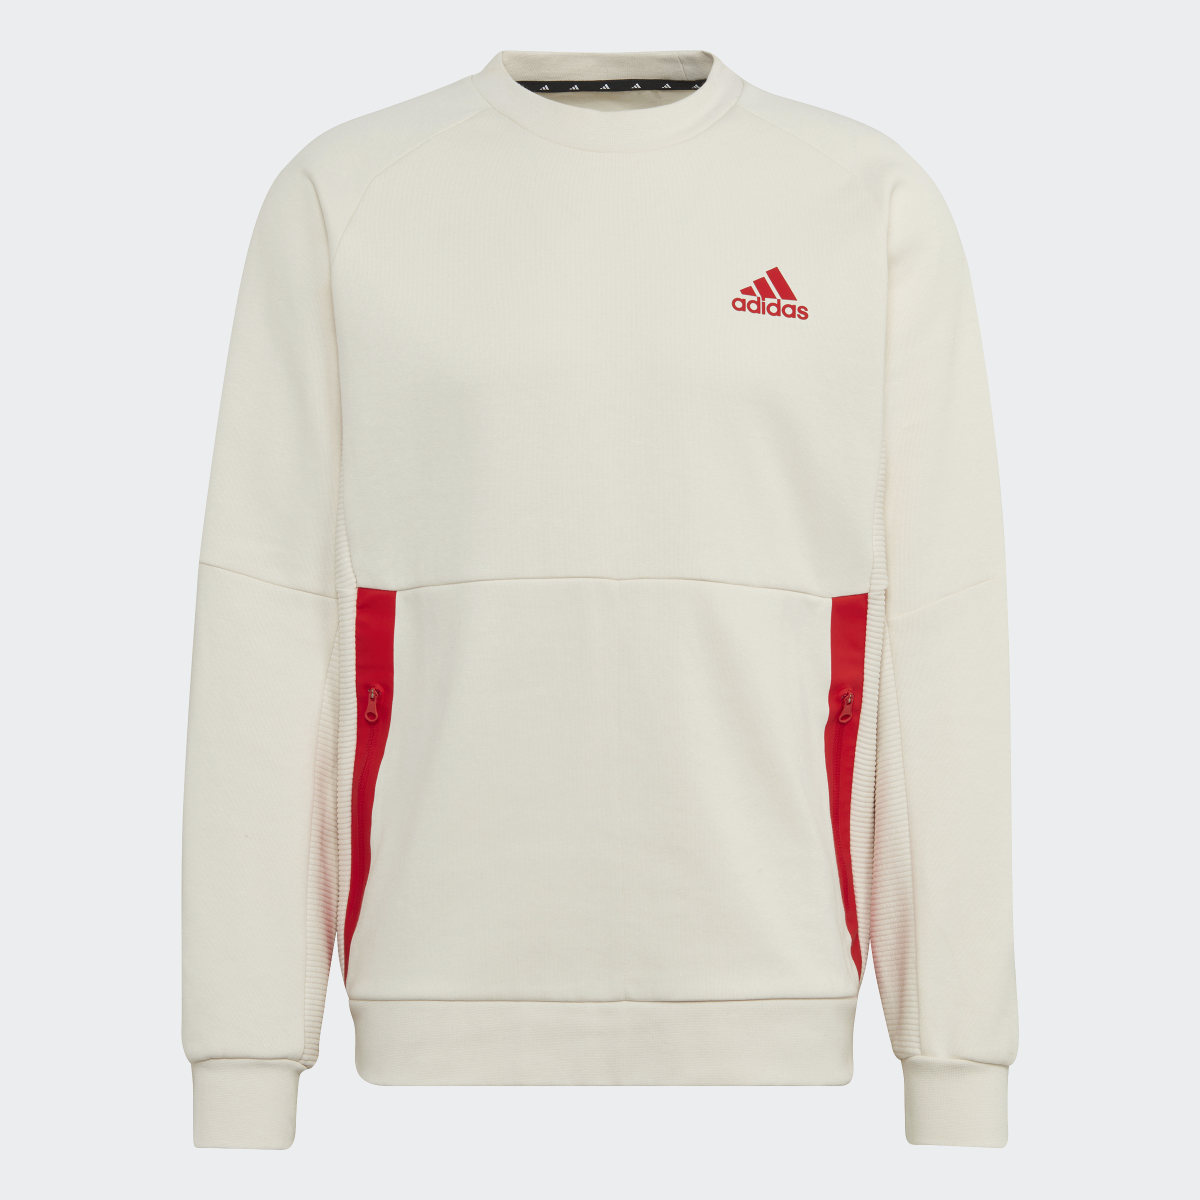 Adidas Designed for Gameday Crew Sweatshirt. 6